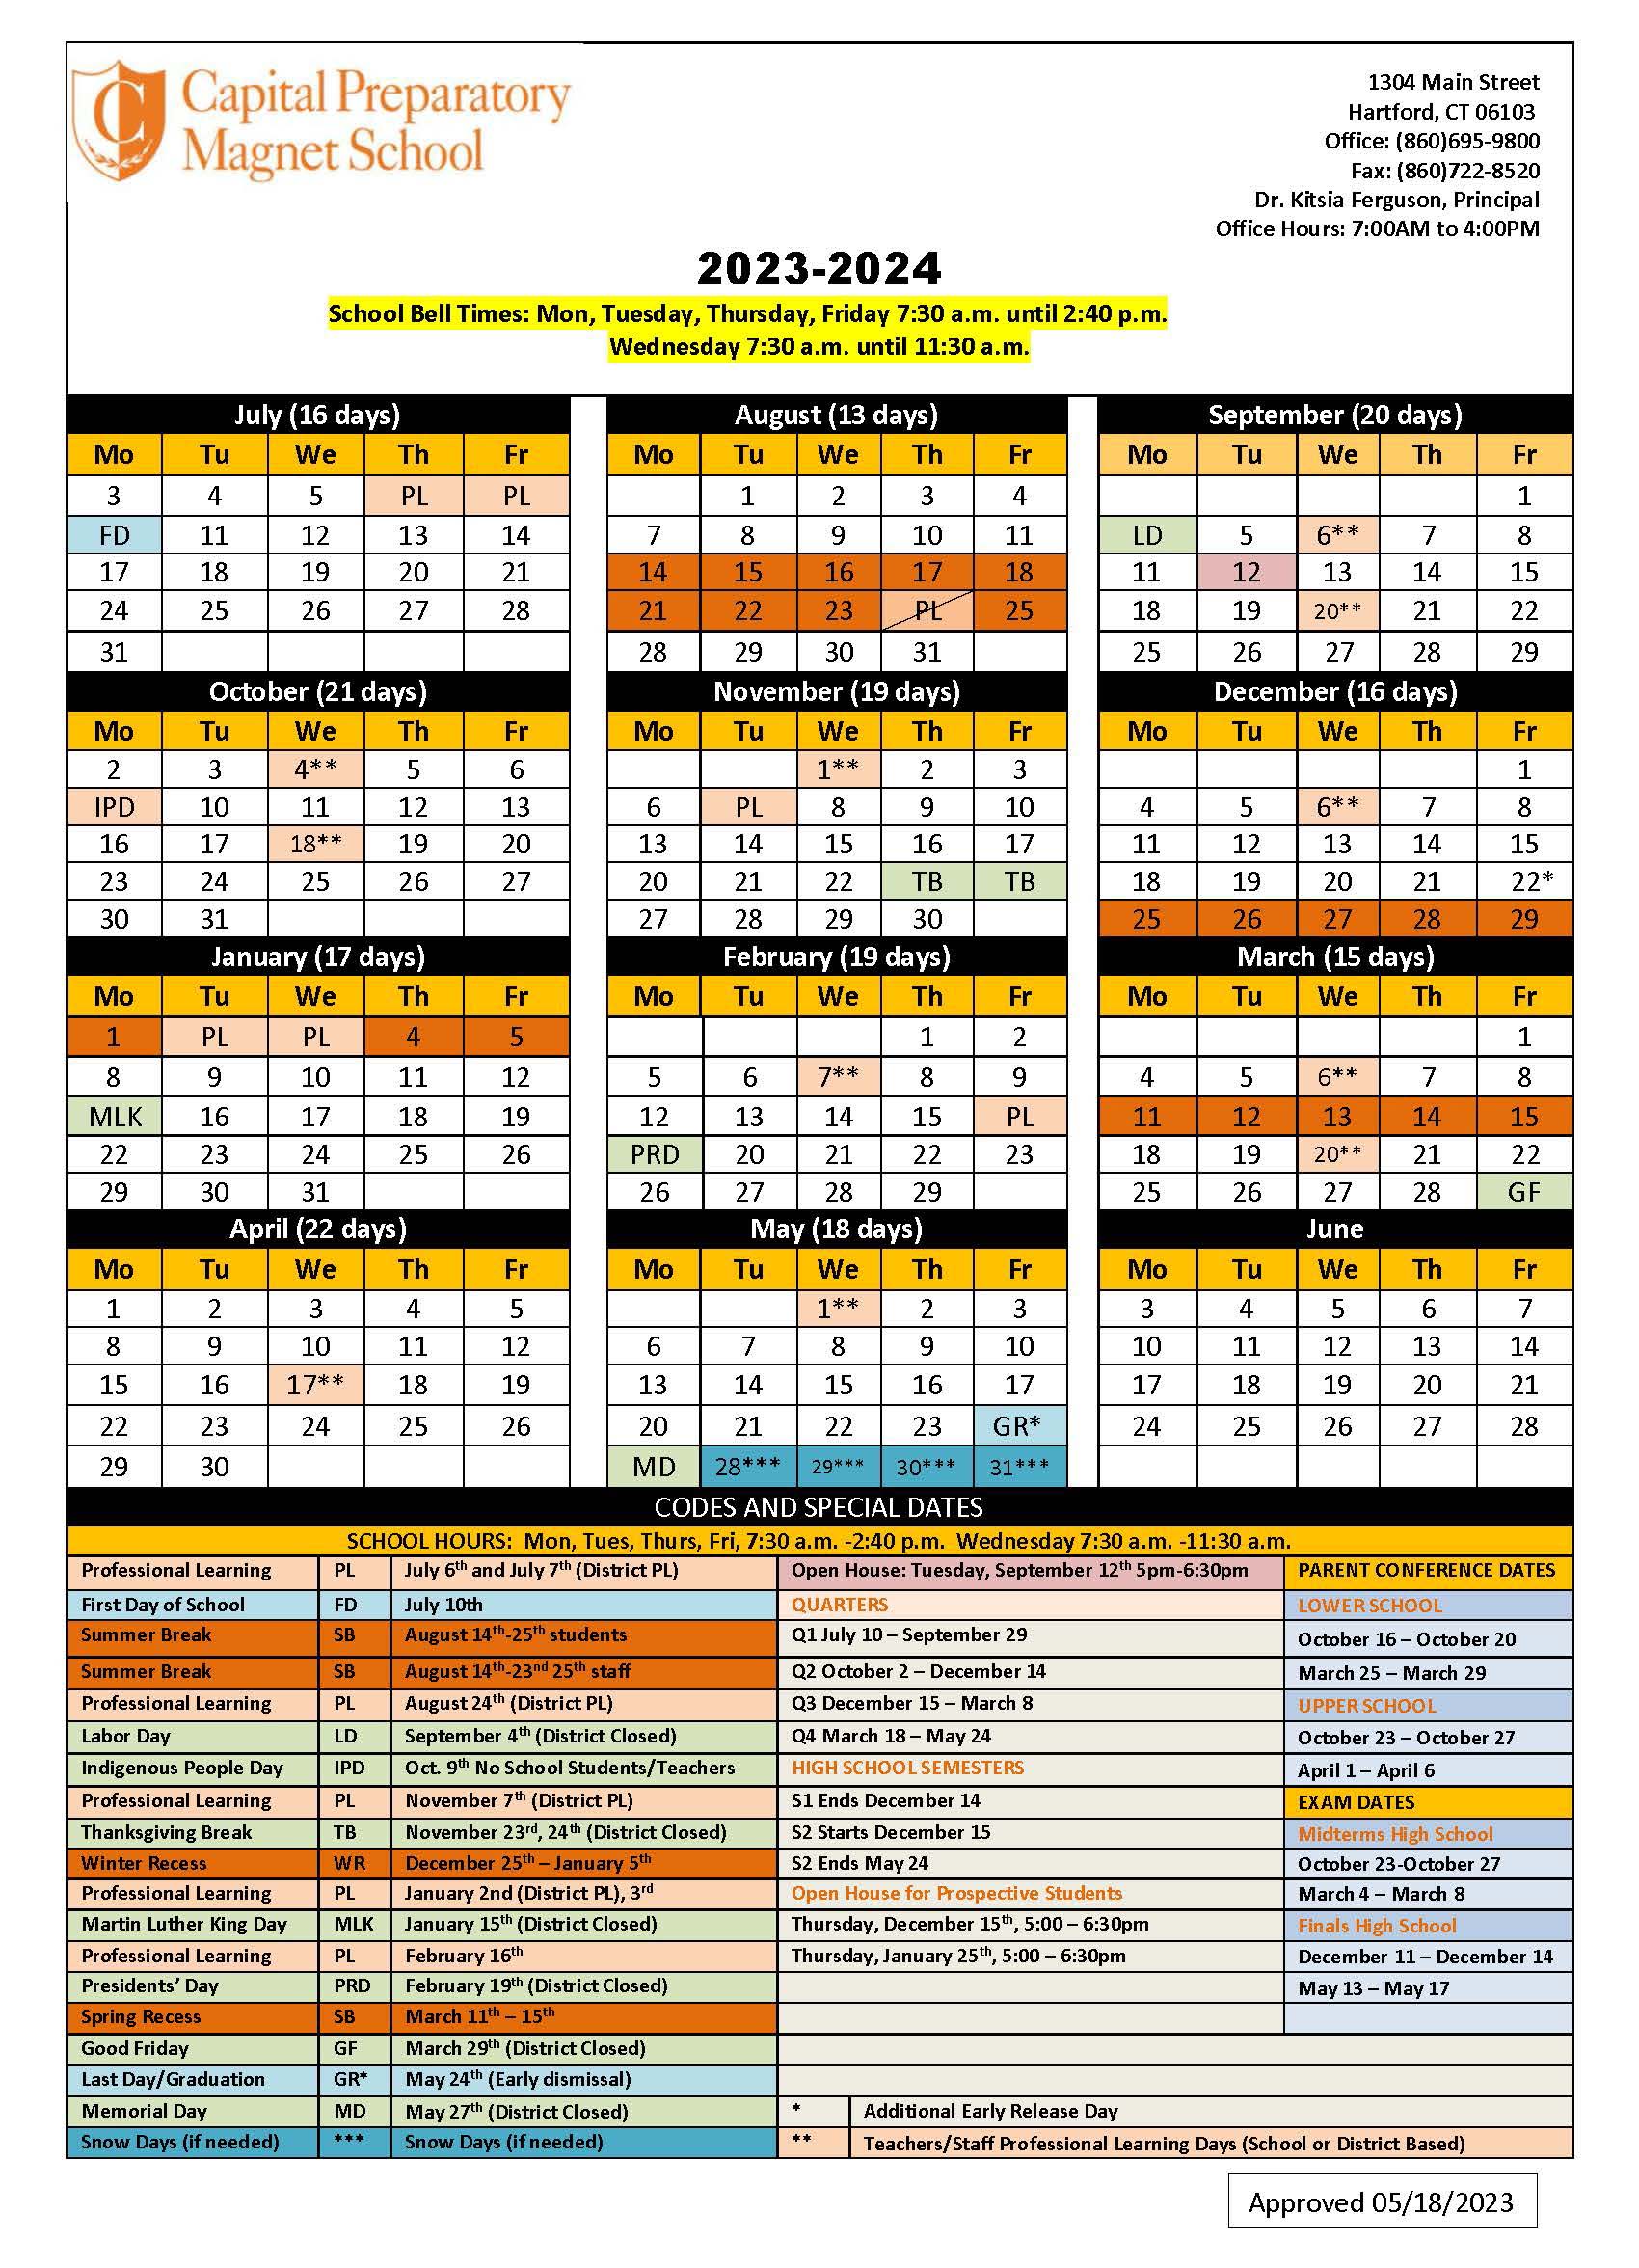 academic calendar cprep 23-24